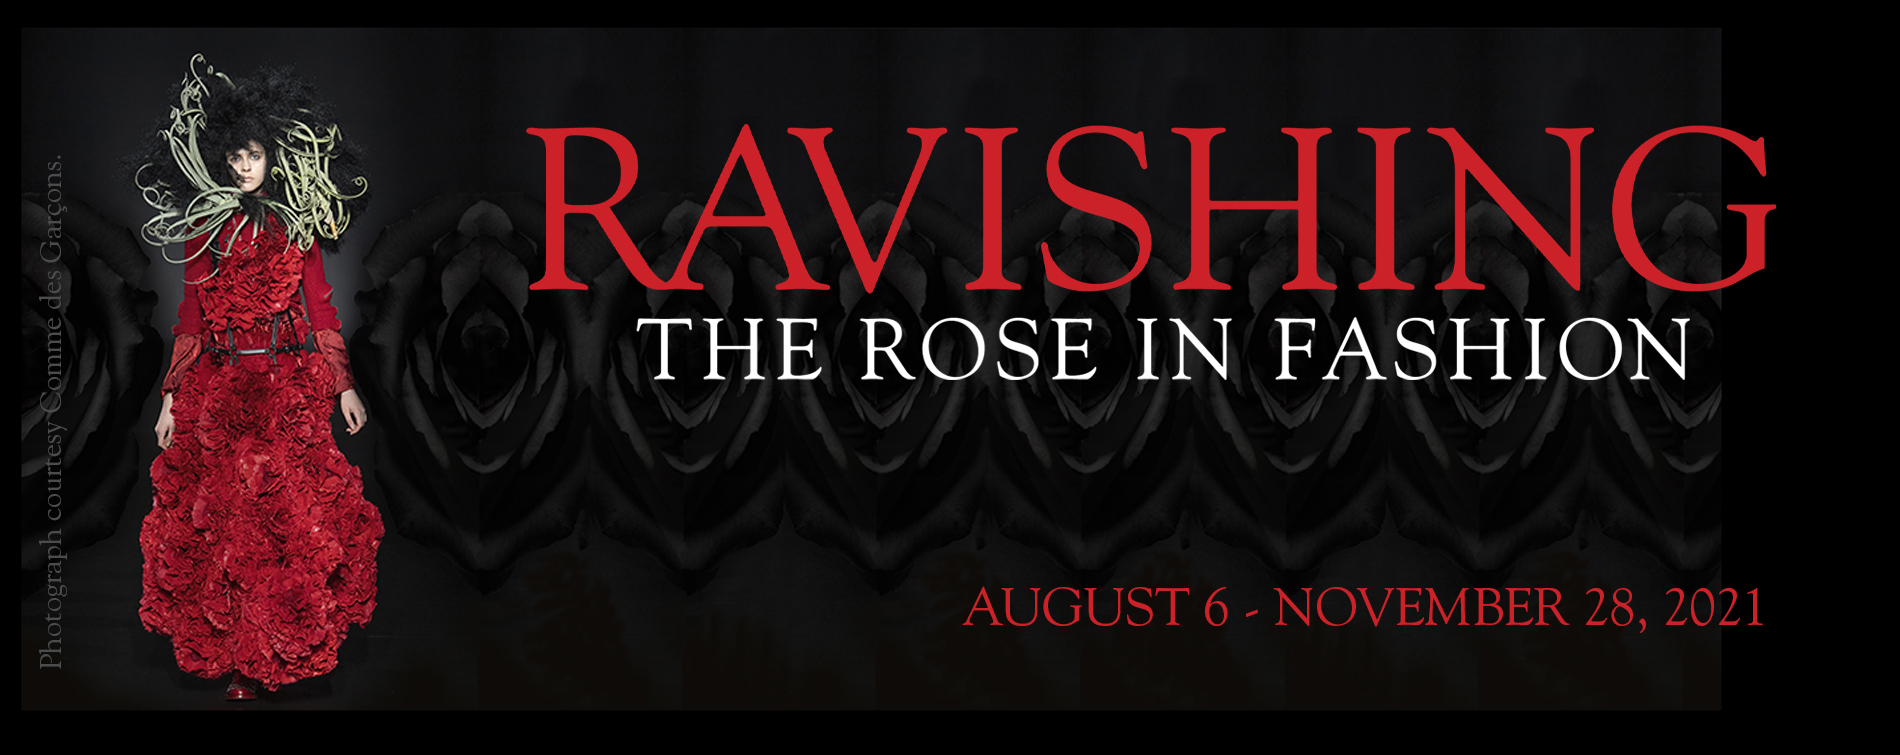 Ravishing: The Rose in Fashion August 6 - November 28, 2021 